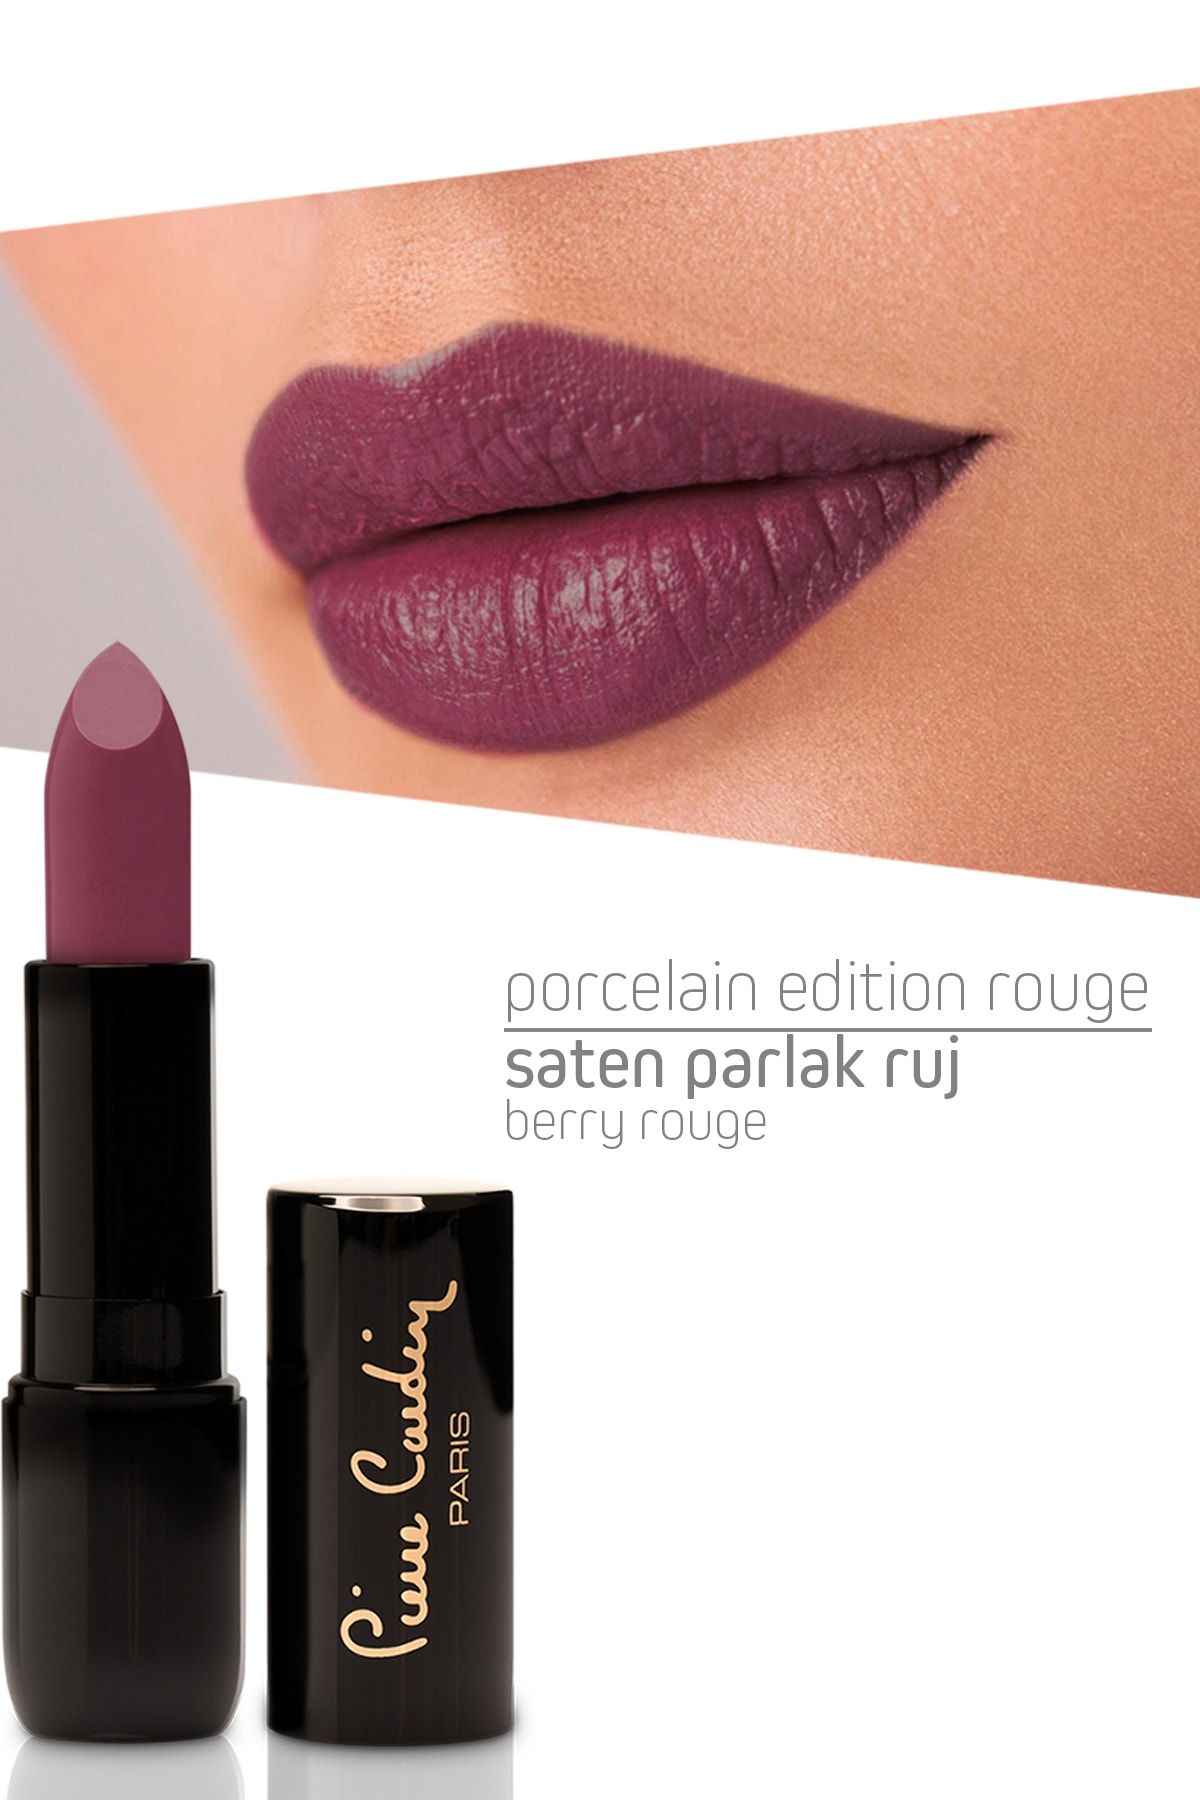 Pierre Cardin Porcelain Edition Lipstick - Berry Rouge - 231 Ruj